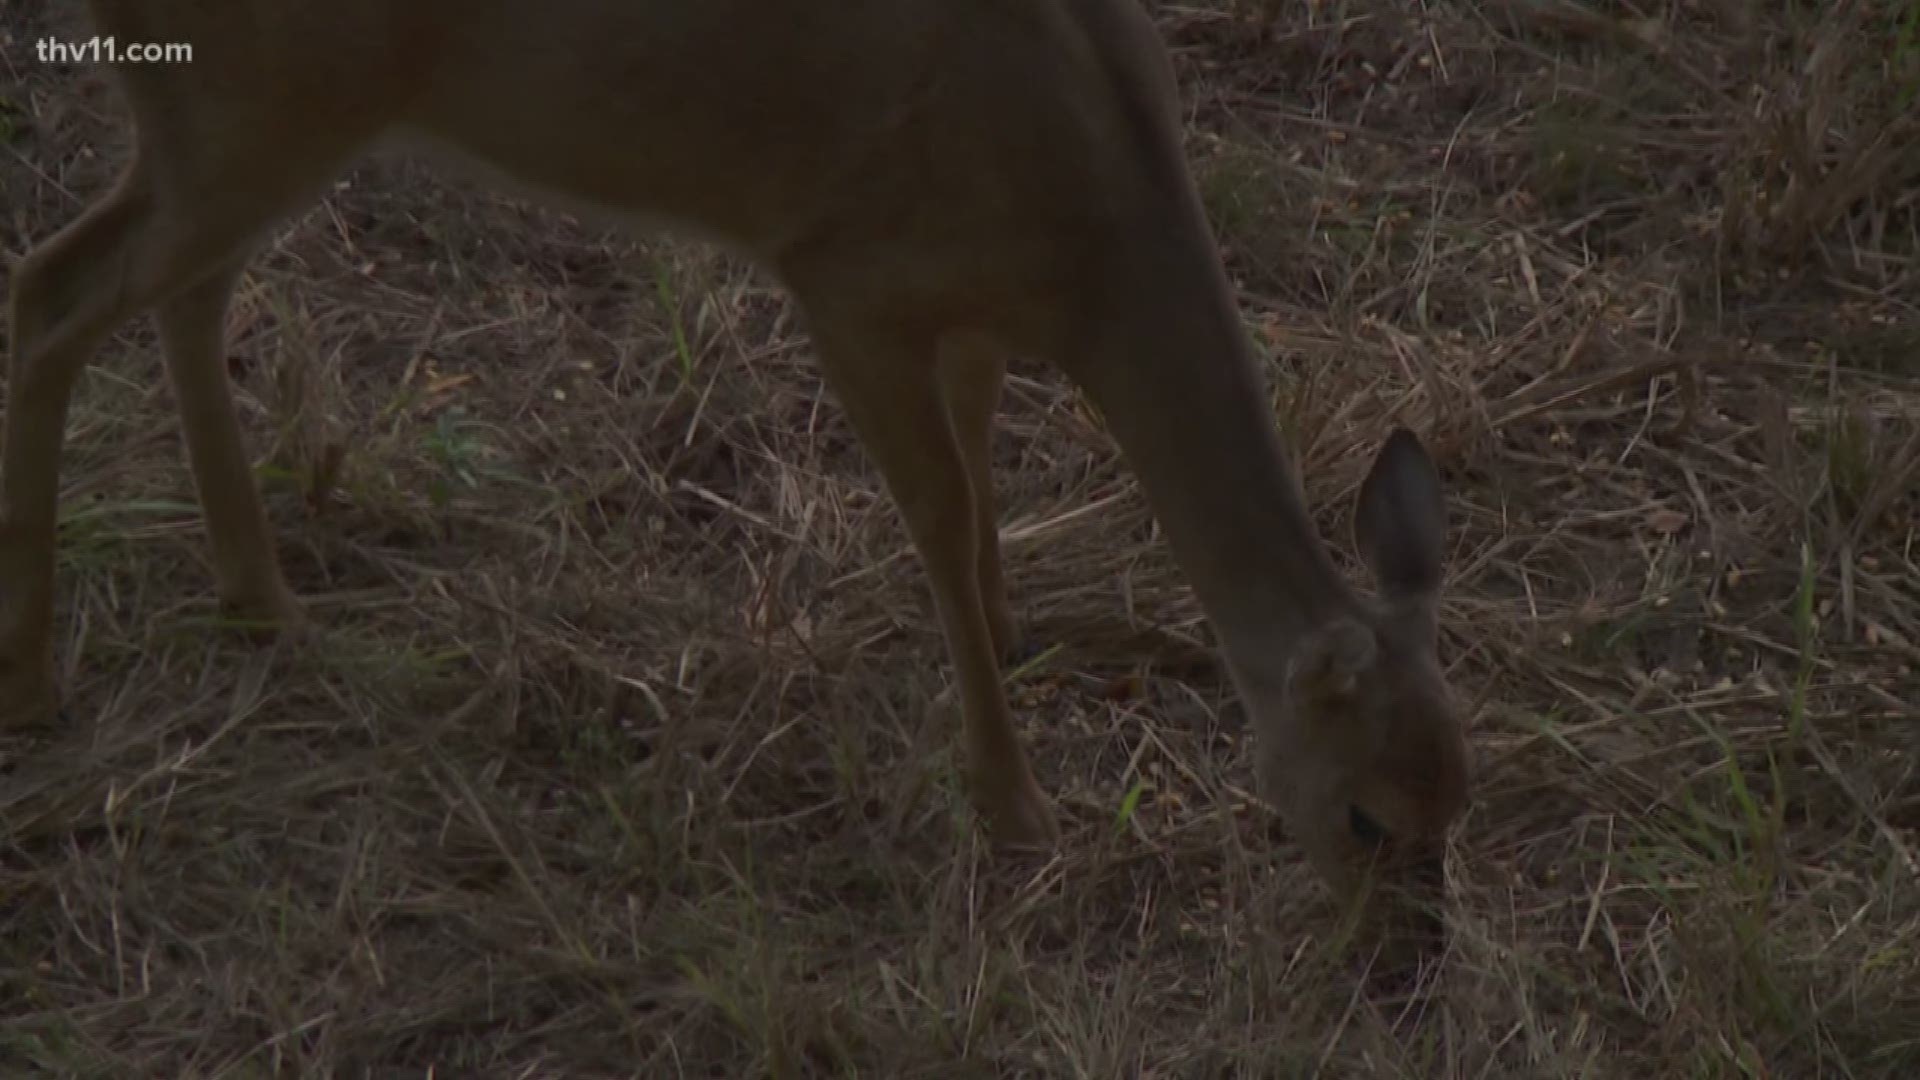 Antlerless only modern gun deer hunt open Saturday on private land